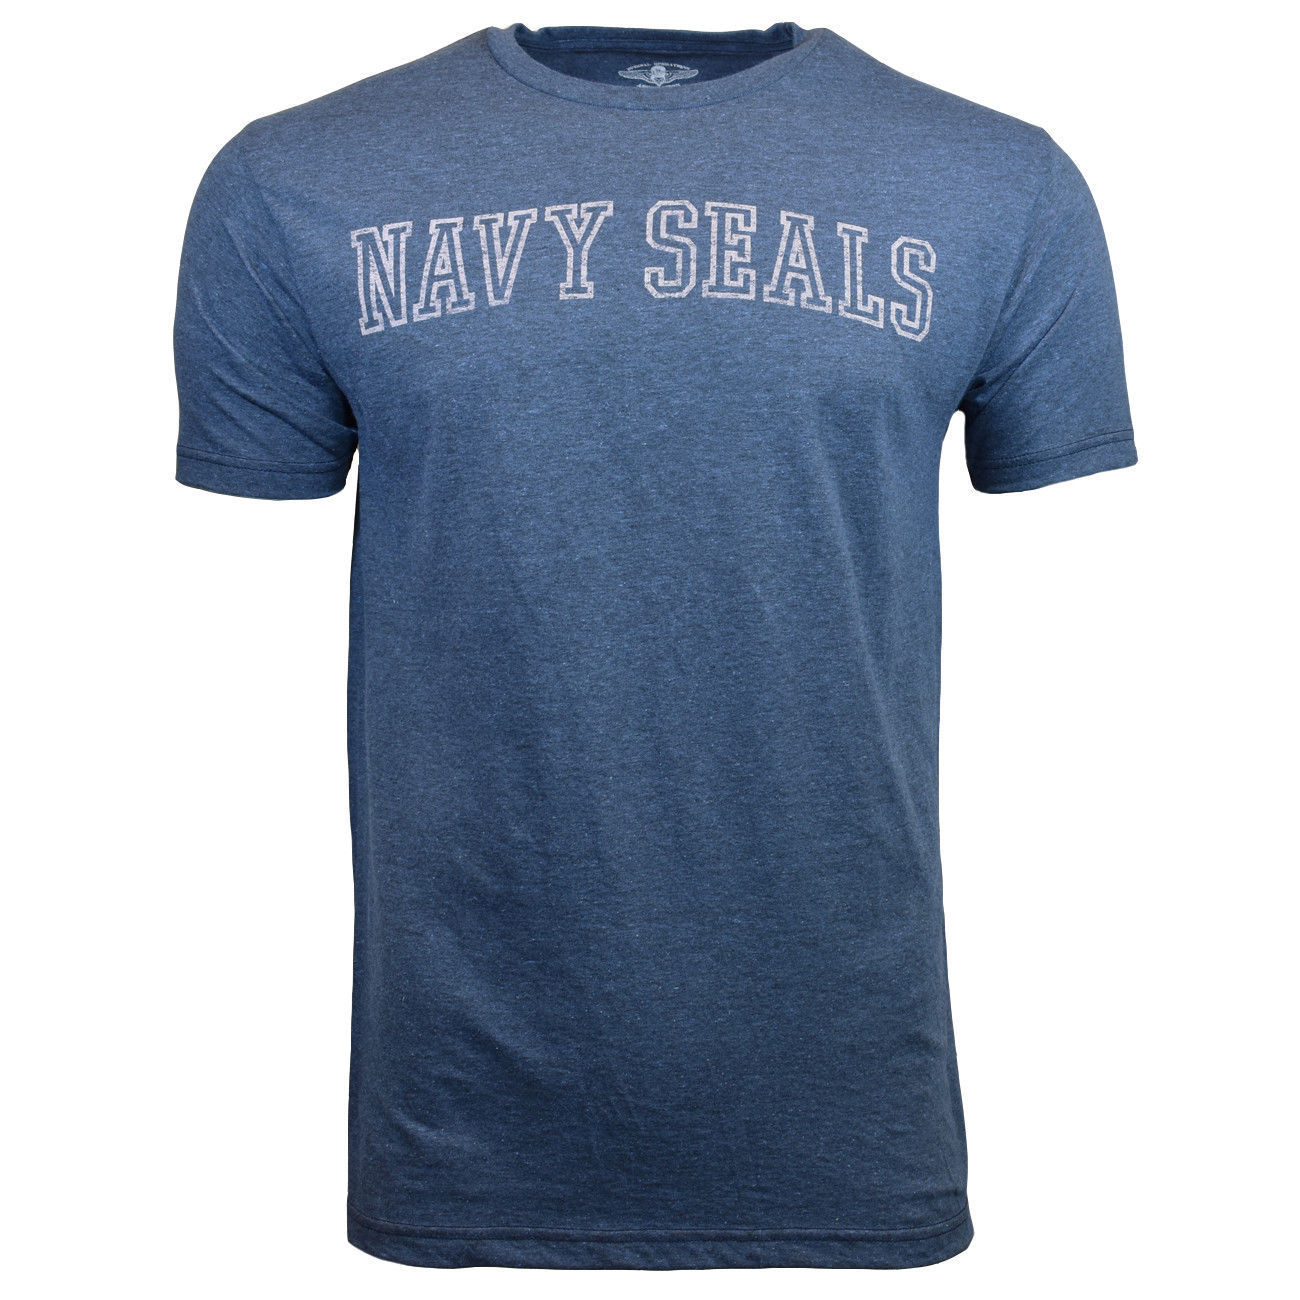 Navy Seals Men's Graphic T-Shirt